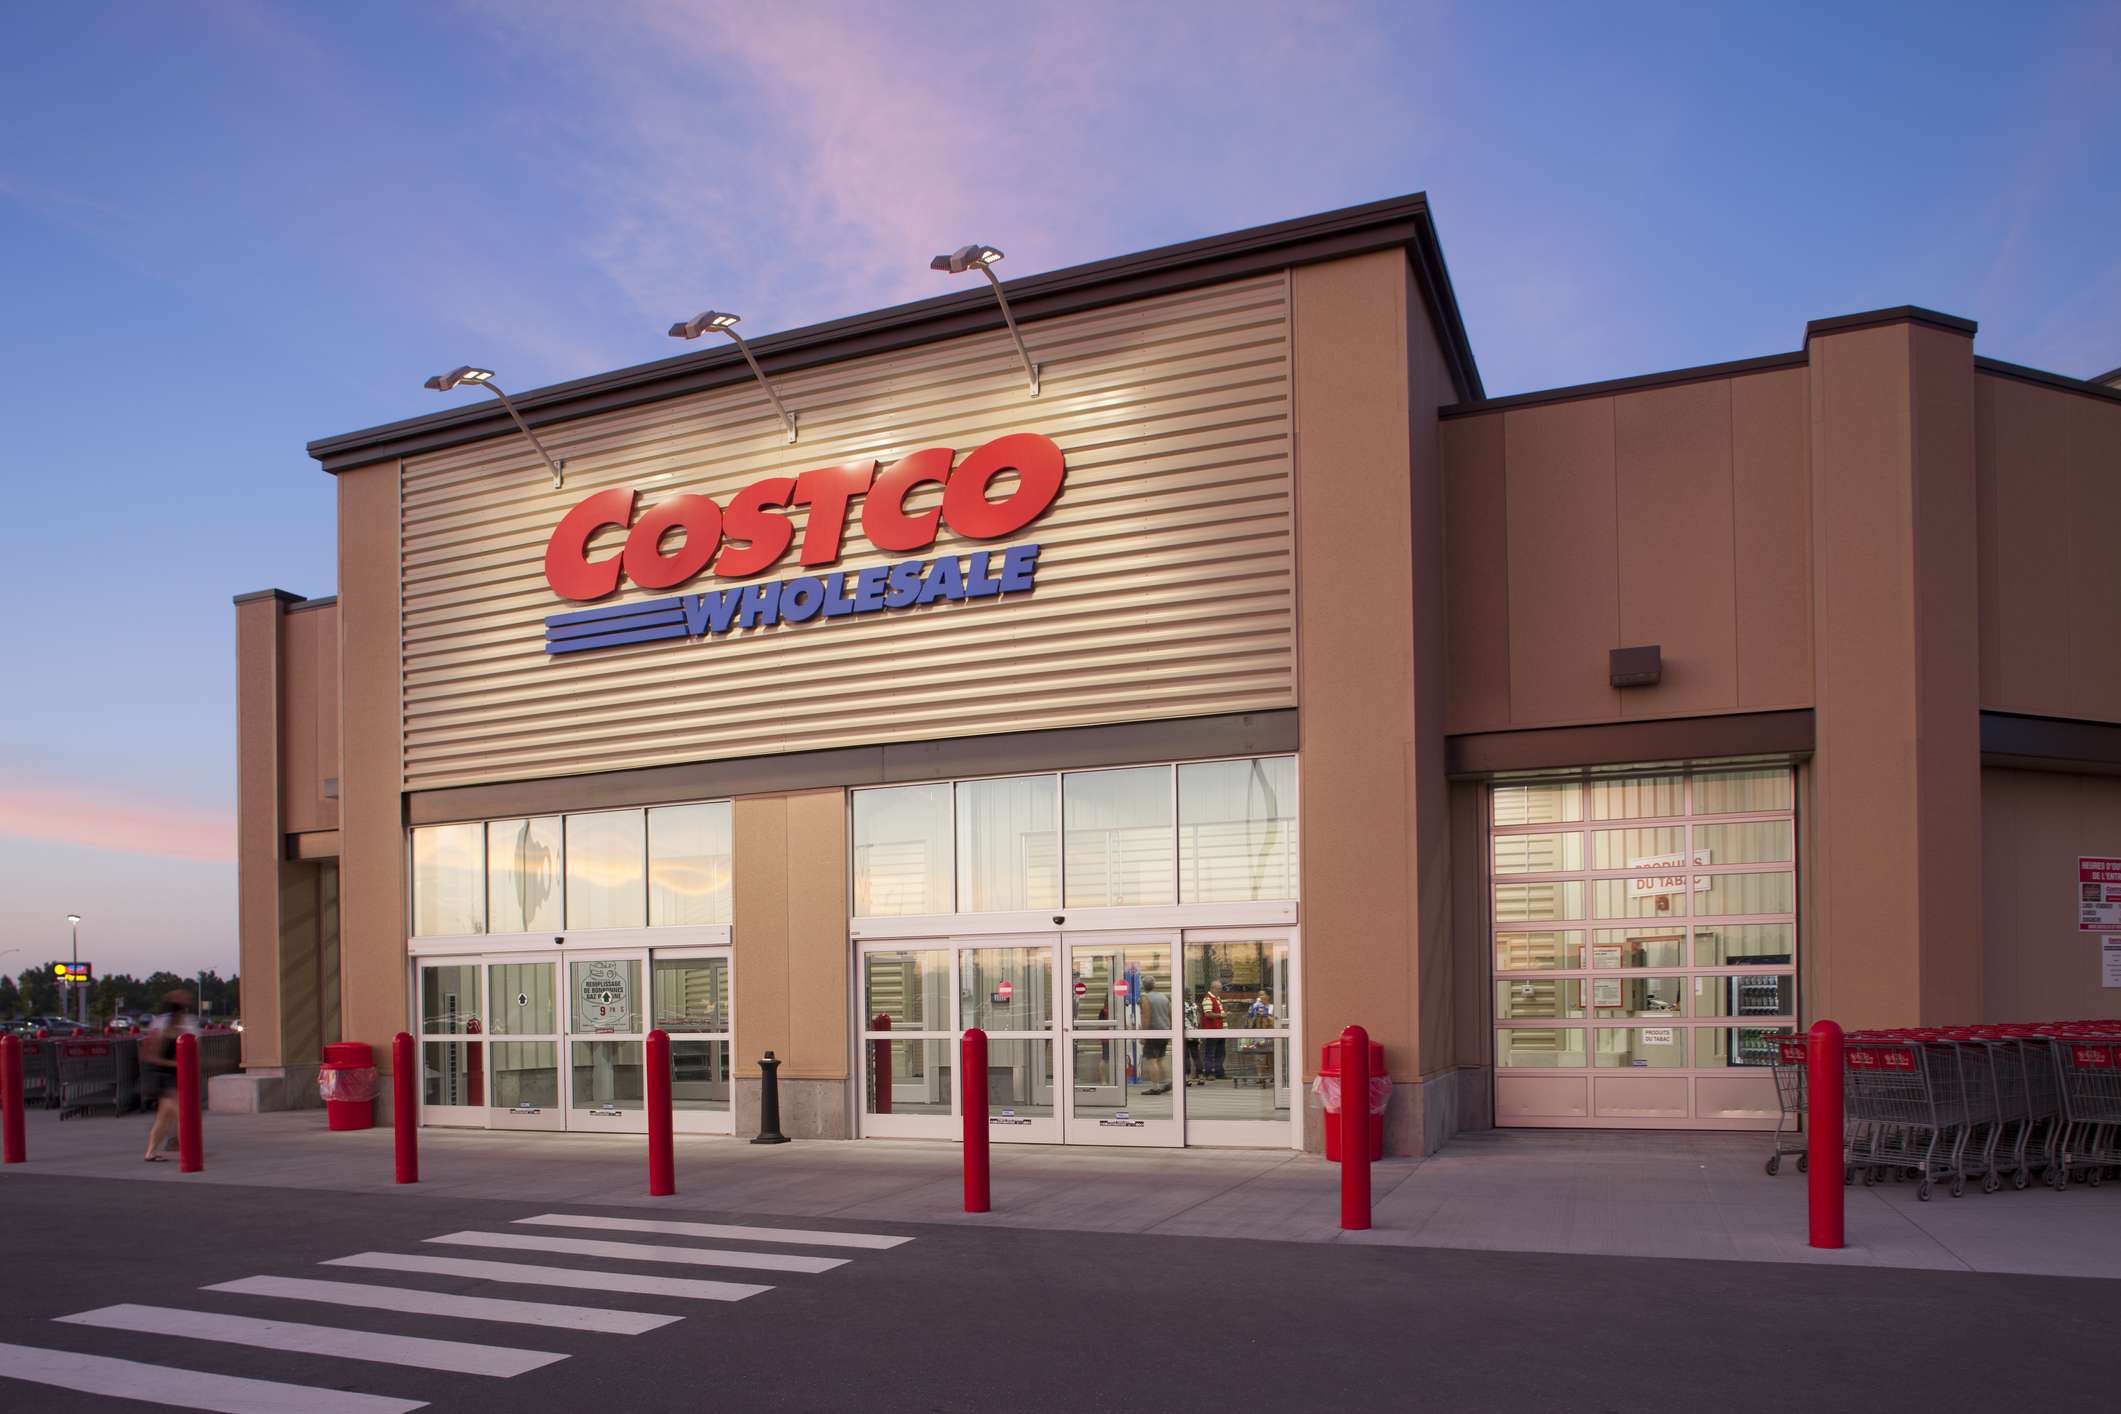 Costco Wholesale operates an international chain of membership warehouses.